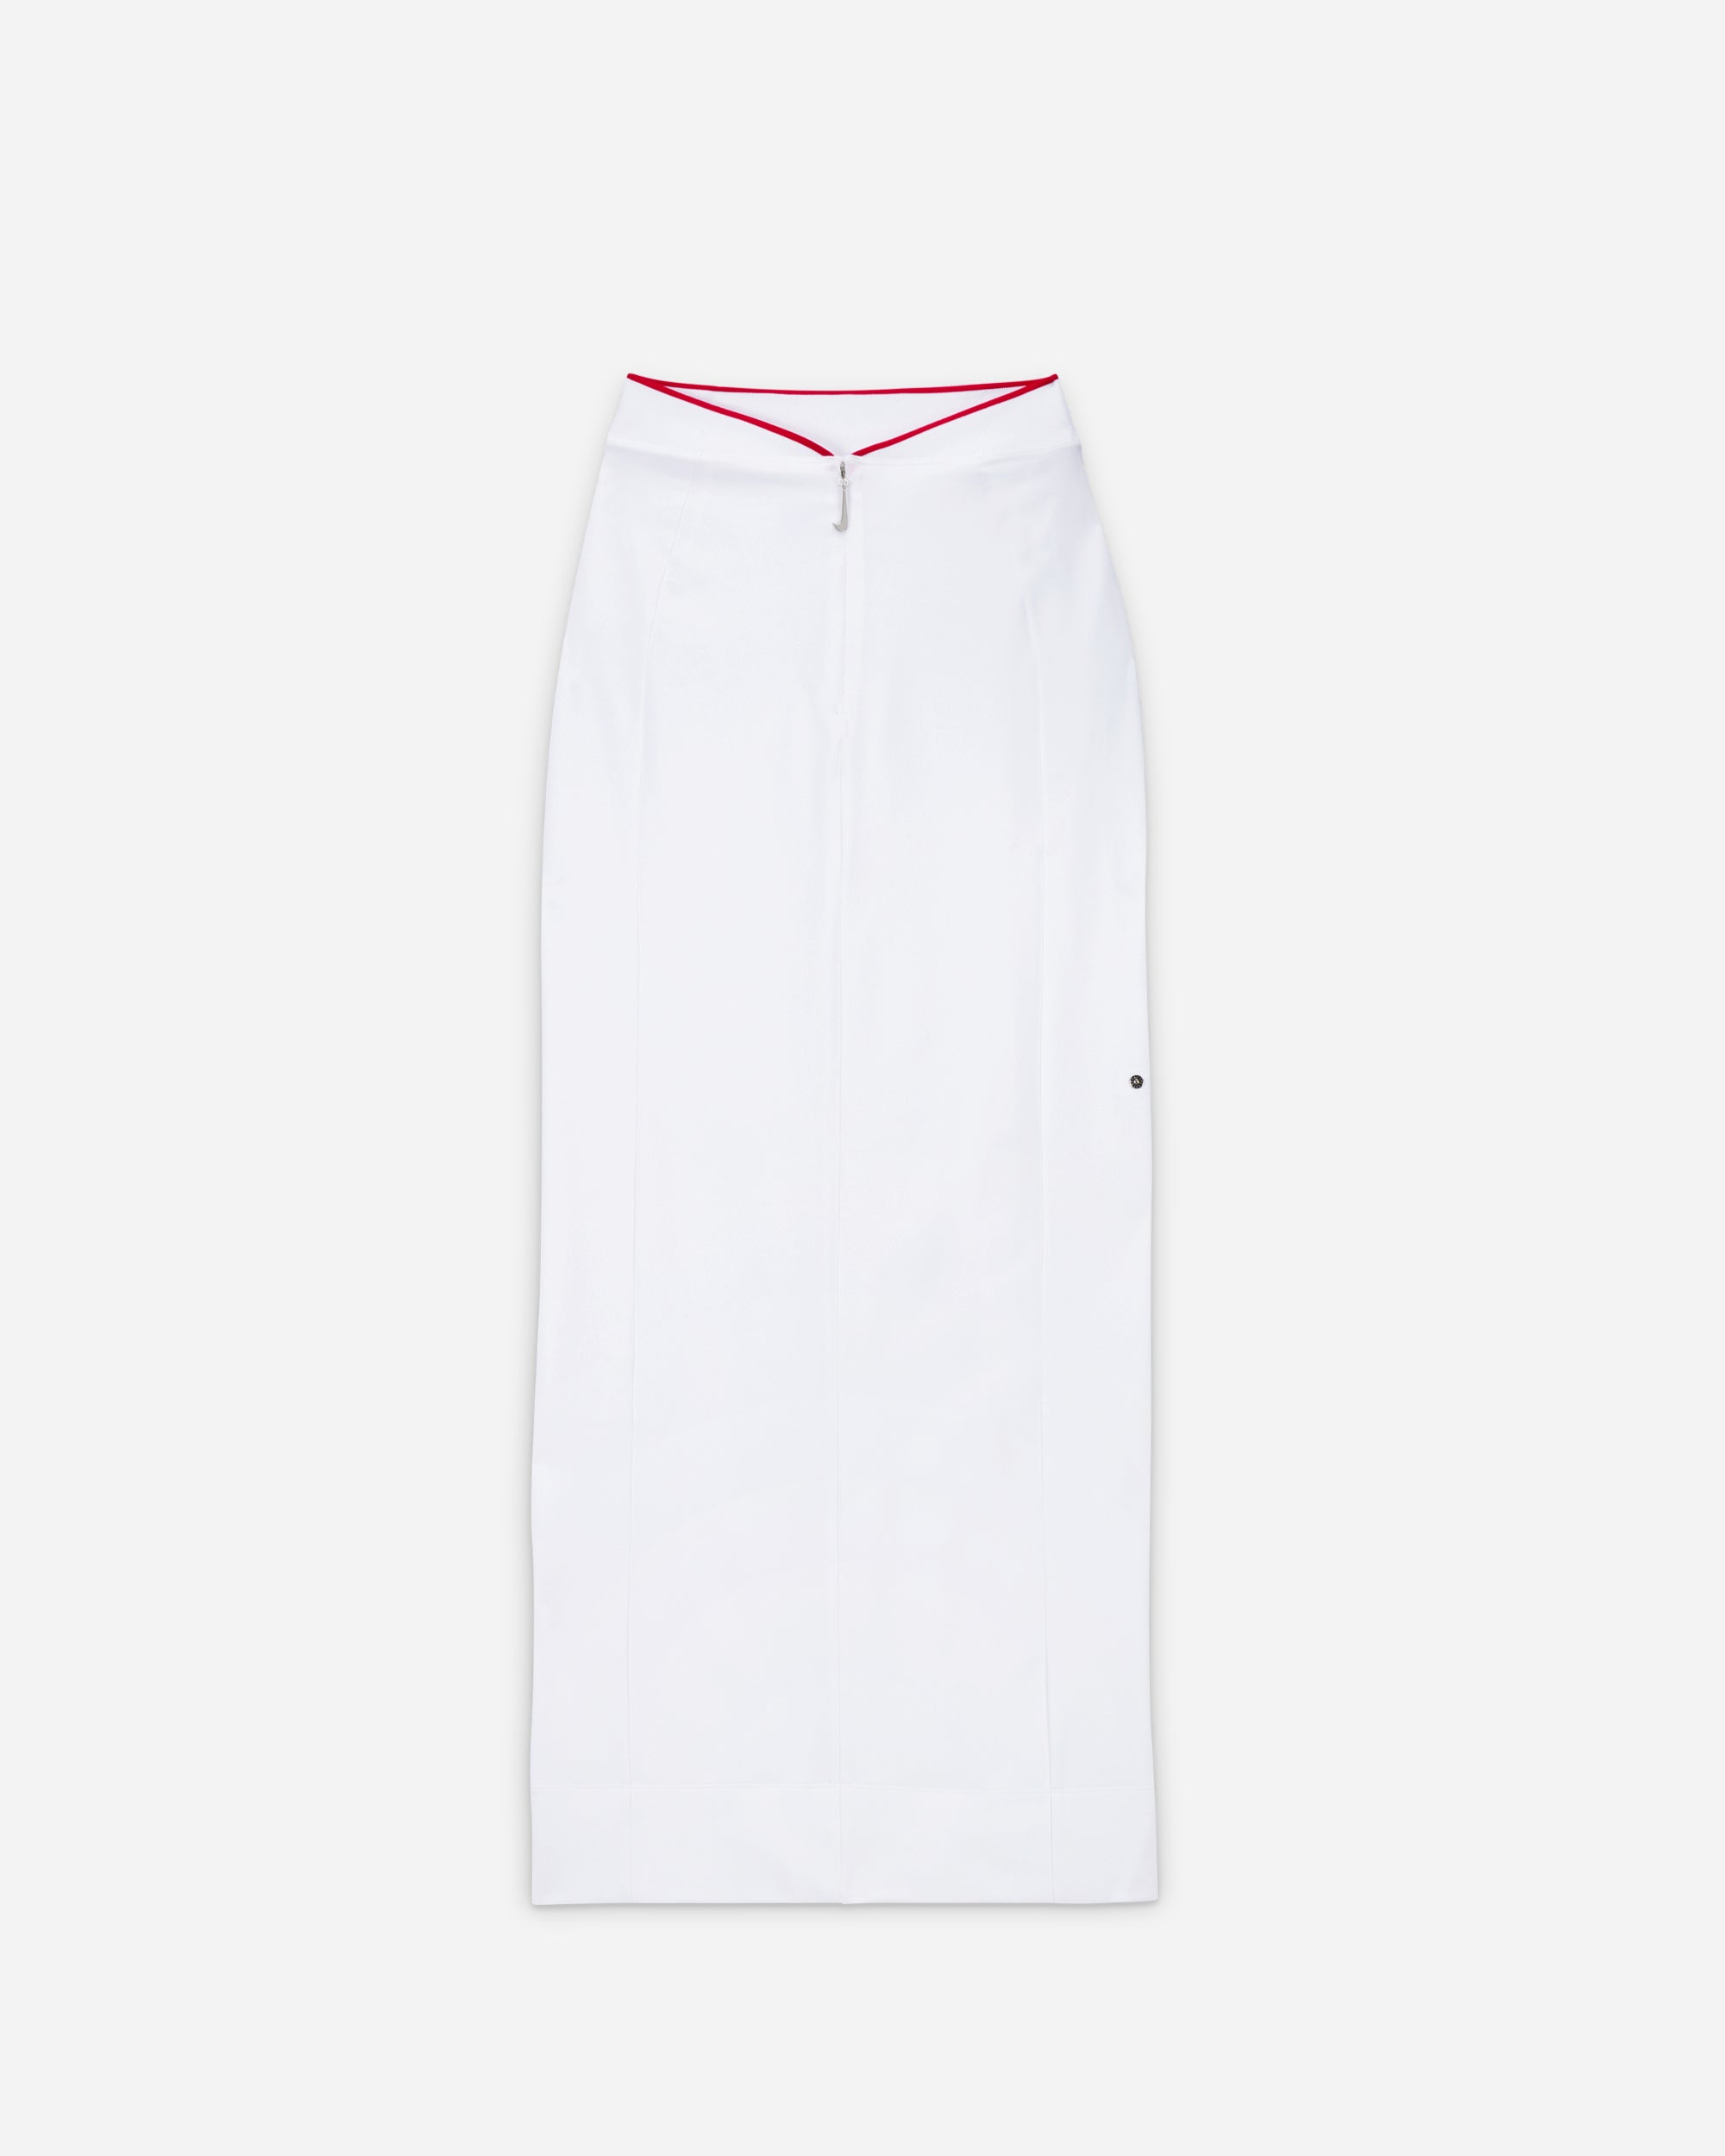 NIKE QS/TZ Nike x JACQUEMUS Long Skirt WHITE/UNIVERSITY RED FV5674-100